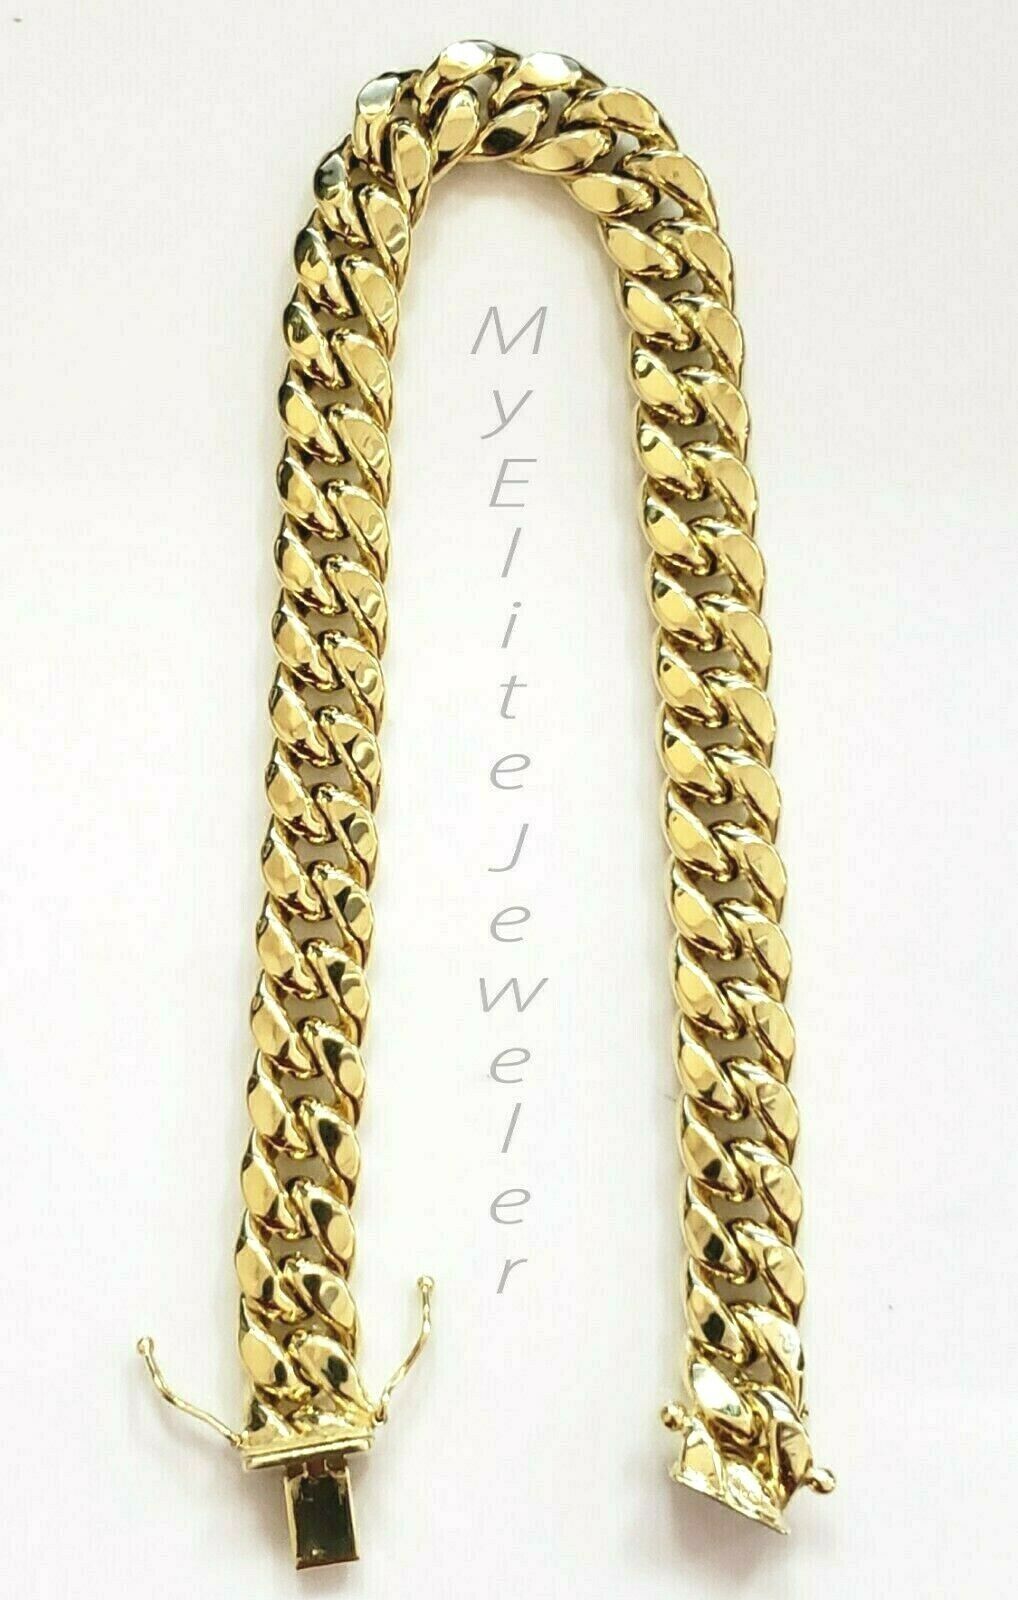 Real 10k Gold Ladies Bracelet cuban Link 7